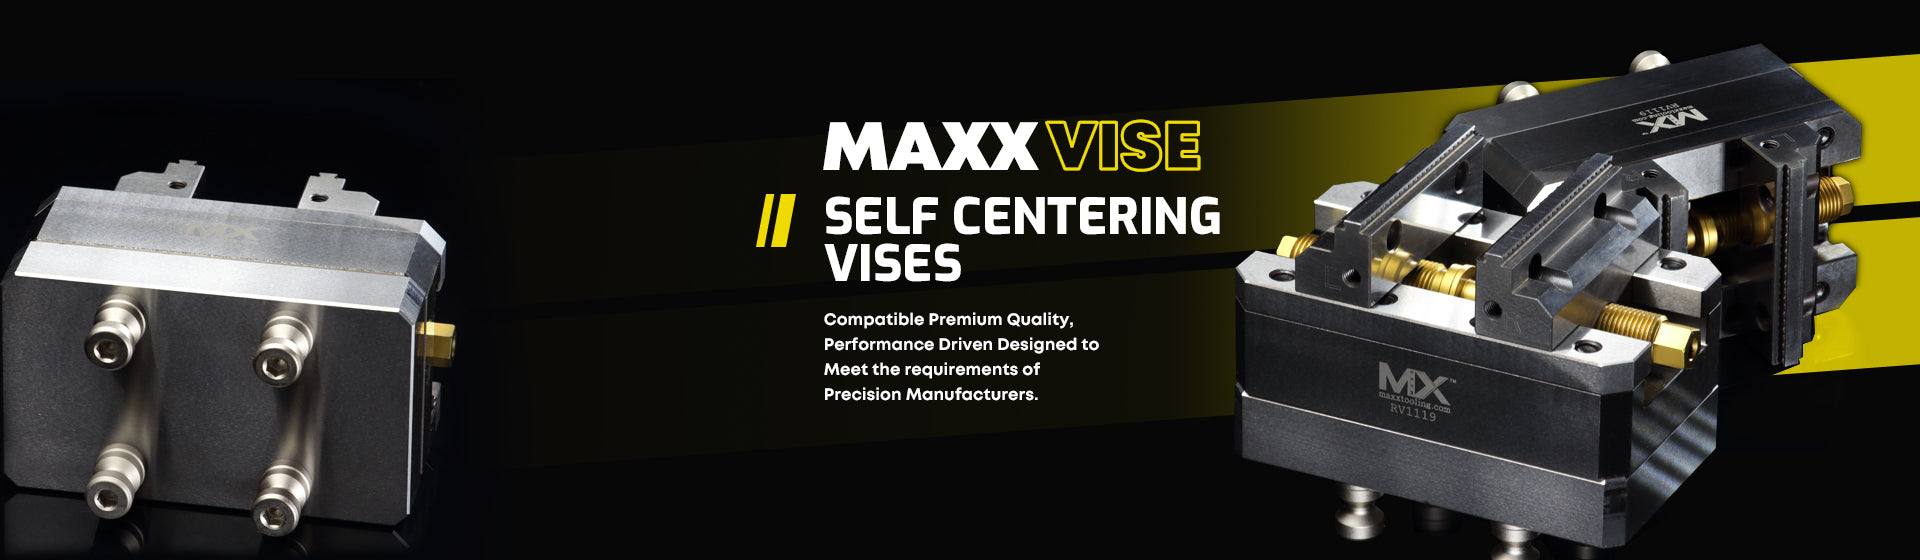 Maxx Vise Self Centering